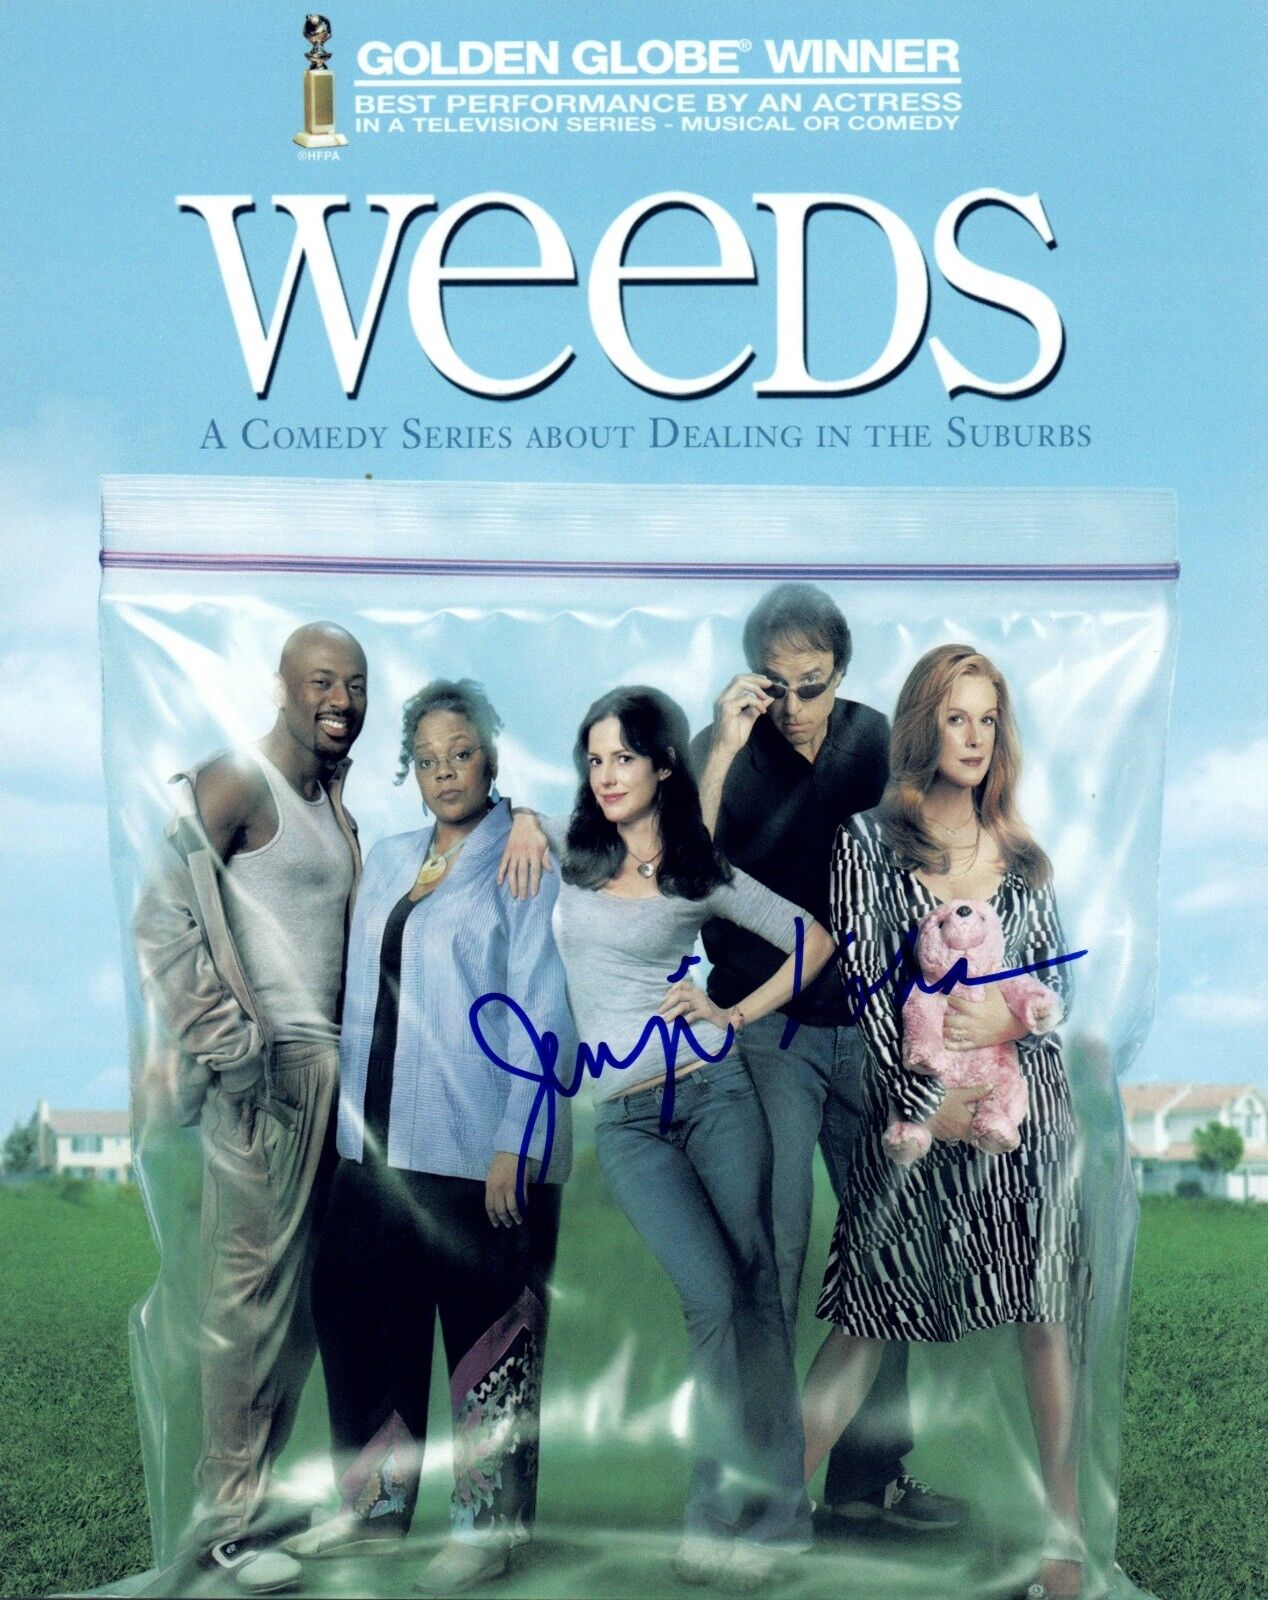 Jenji Kohan Signed Autographed 8x10 Photo Poster painting WEEDS Show Creator COA AB